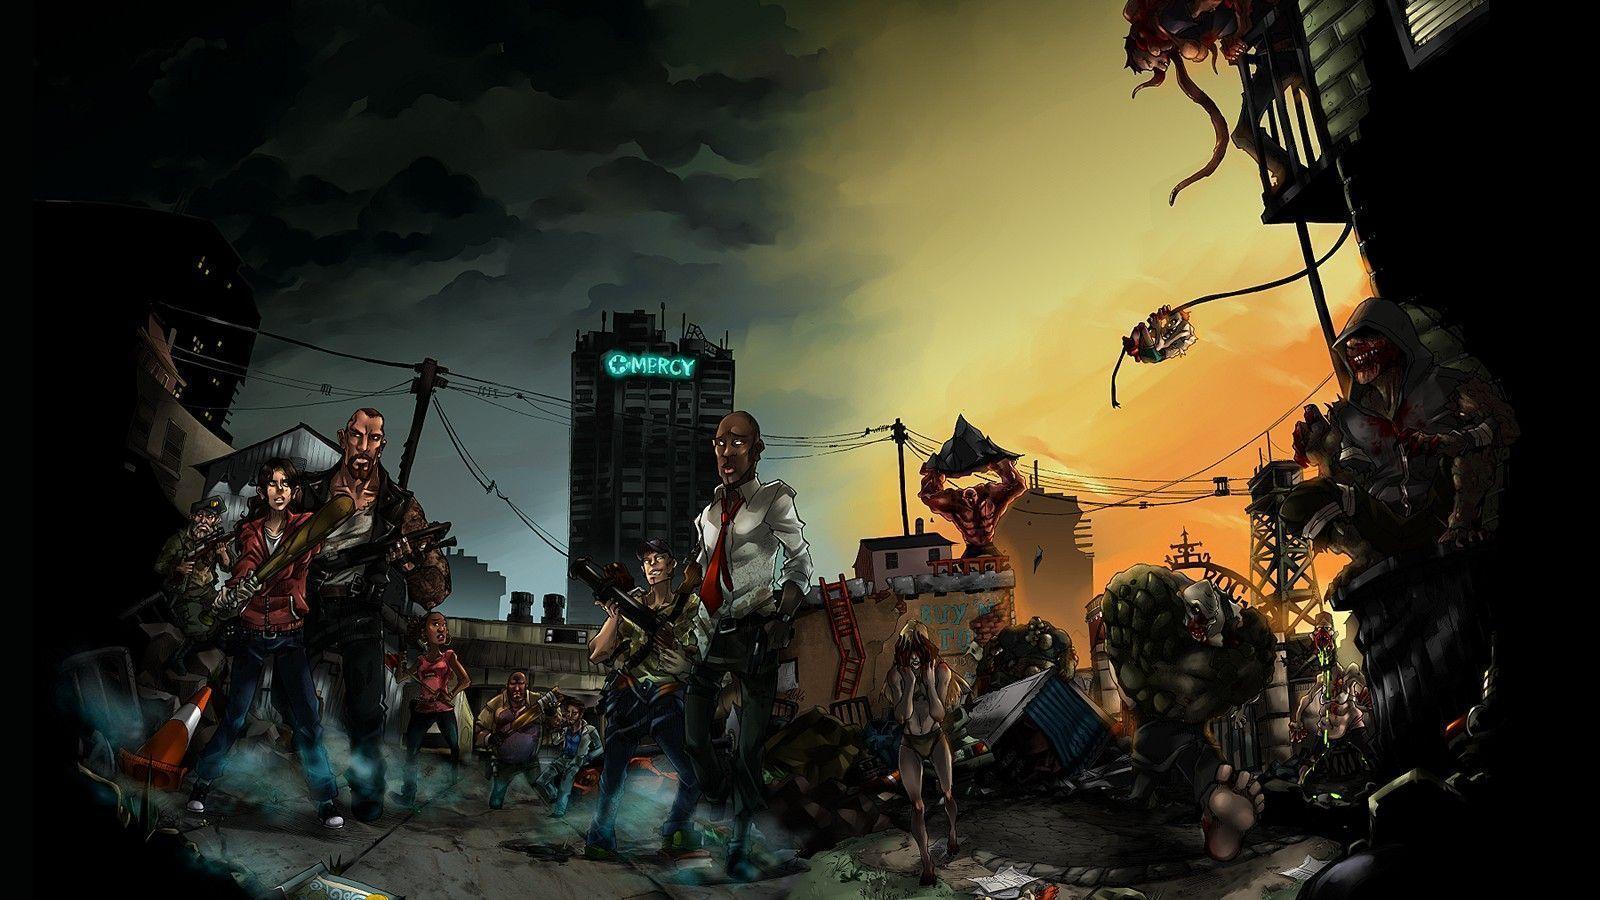 Left 4 Dead L4d Zombies Dark Wallpaper Background